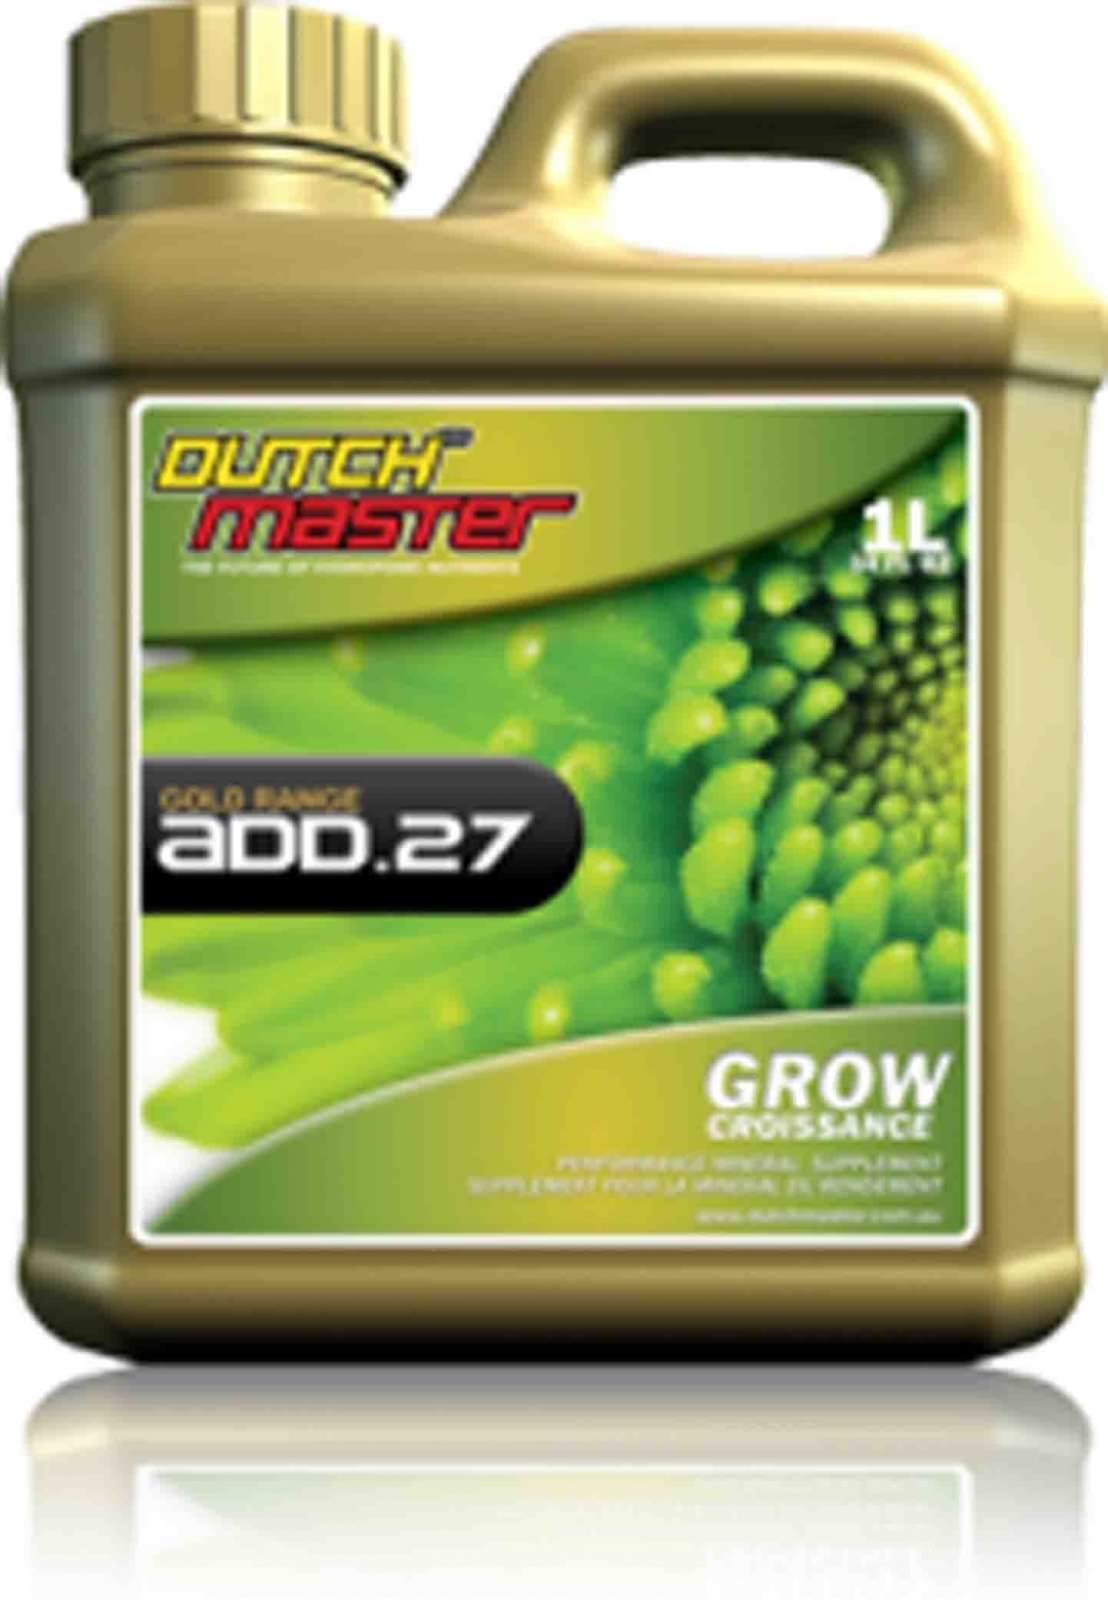 add27-grow-1309257614